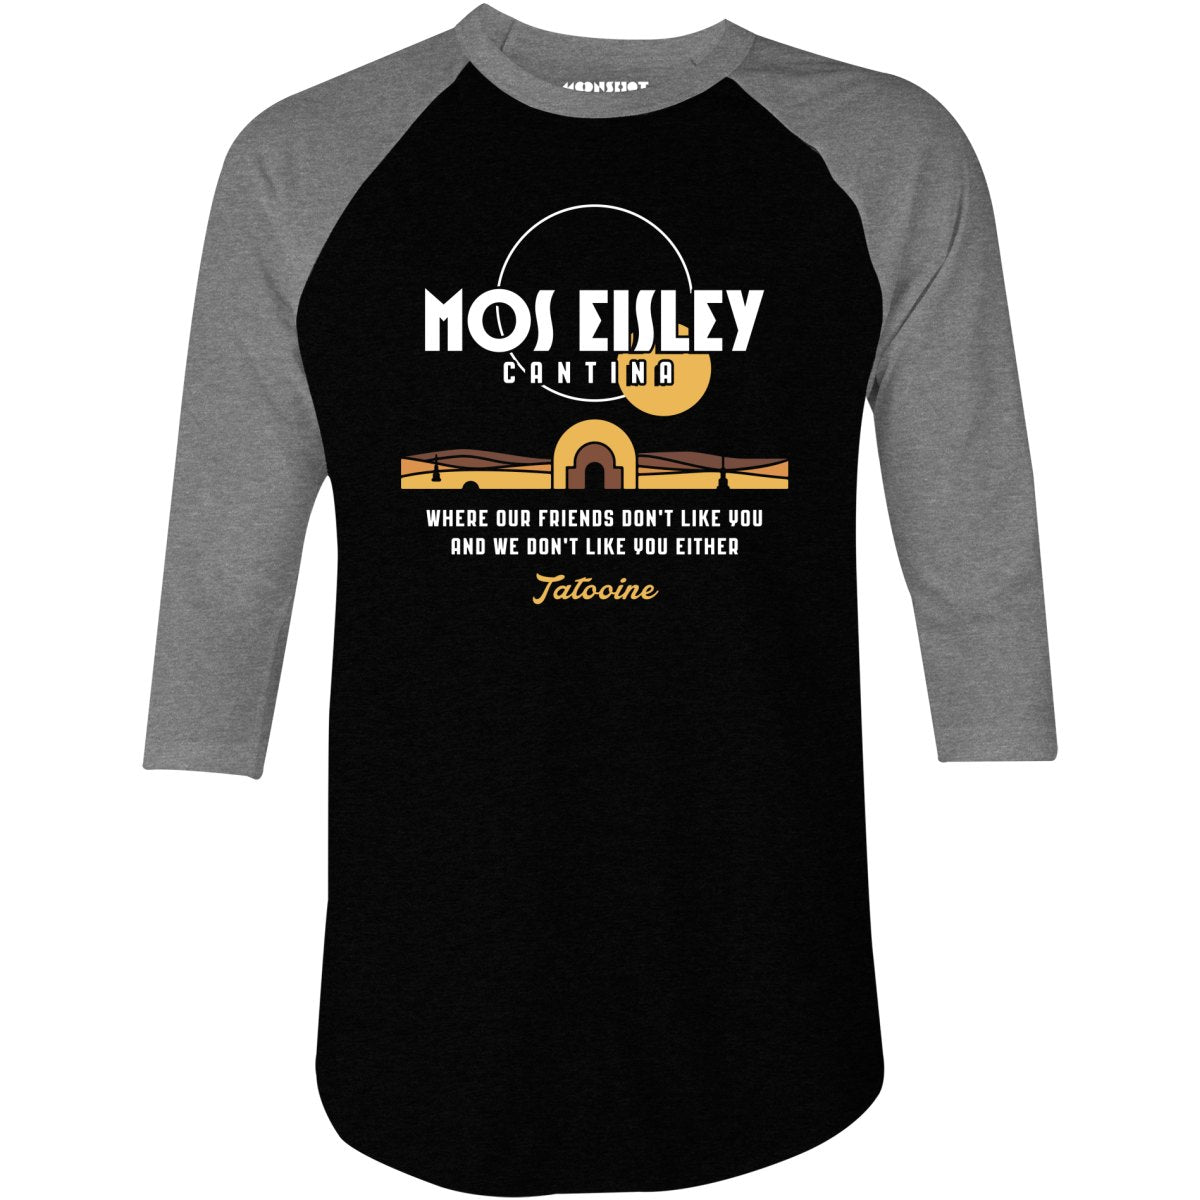 Mos Eisley Cantina - 3/4 Sleeve Raglan T-Shirt